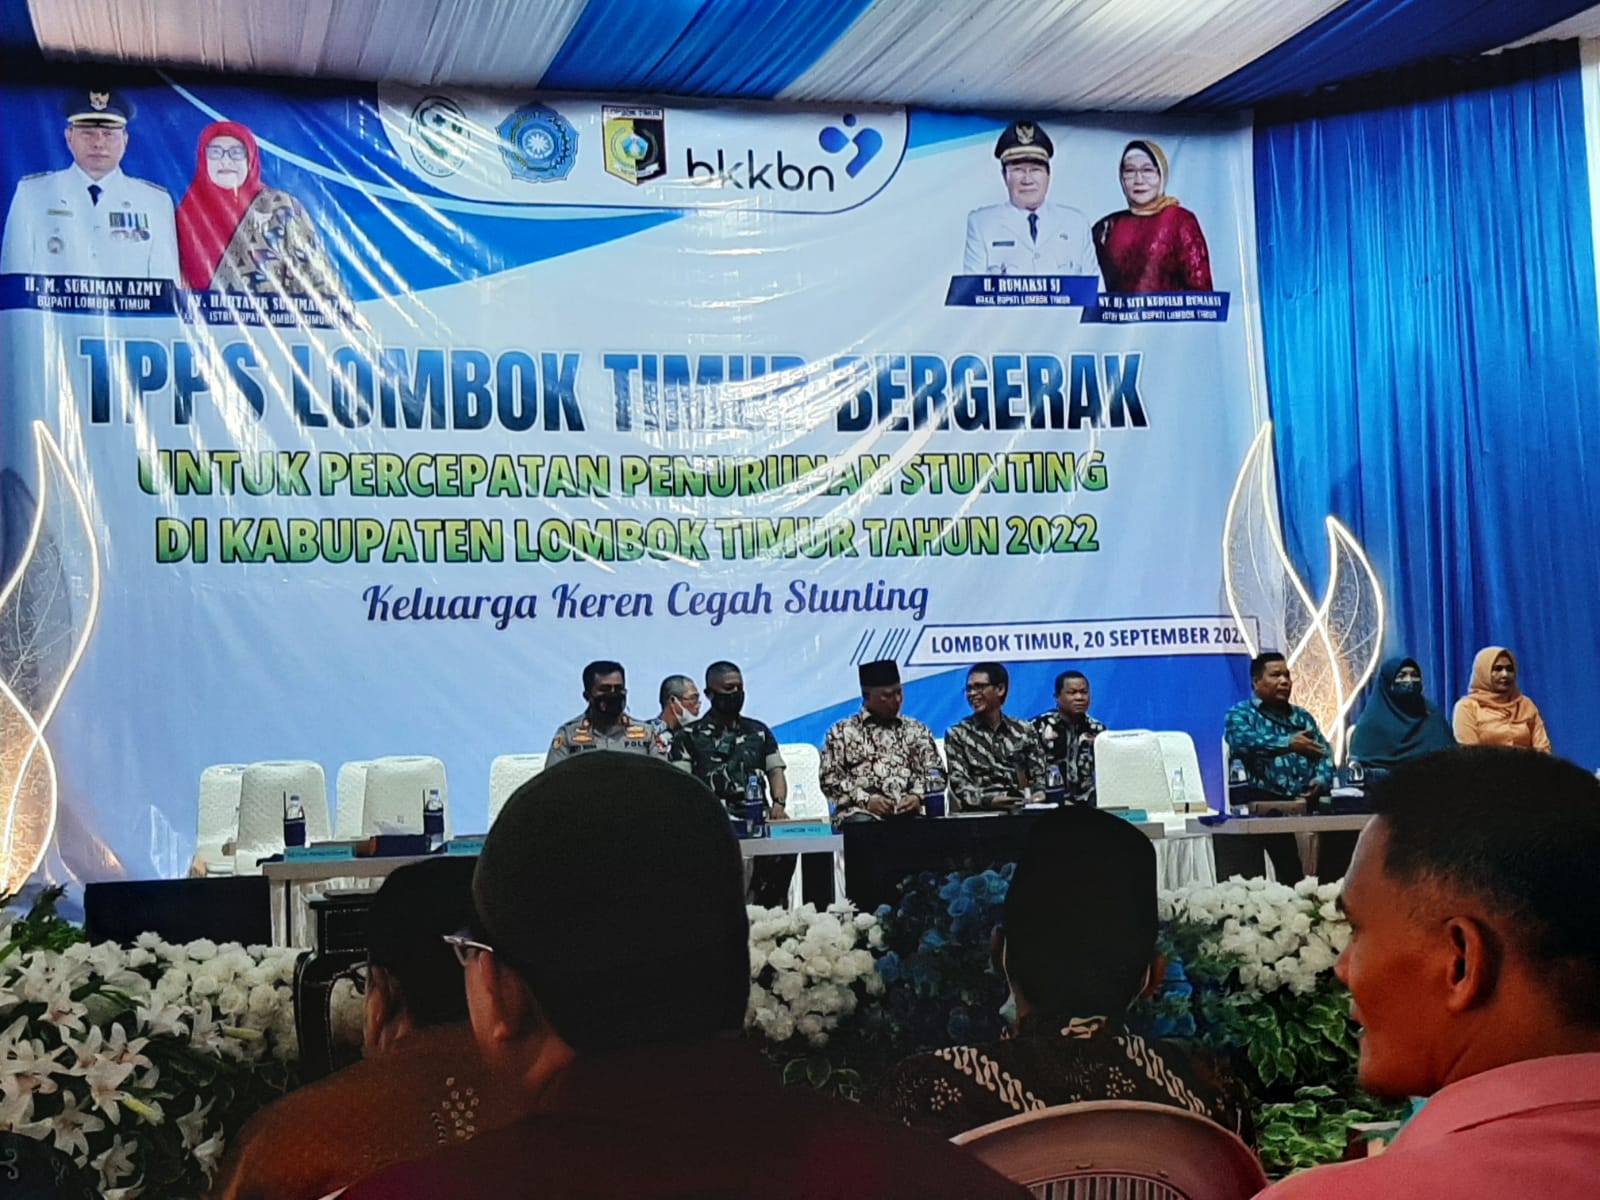 Acara TPPS Lombok Timur Bergerak di Gedung Wanita. ( 20-09-2022 )